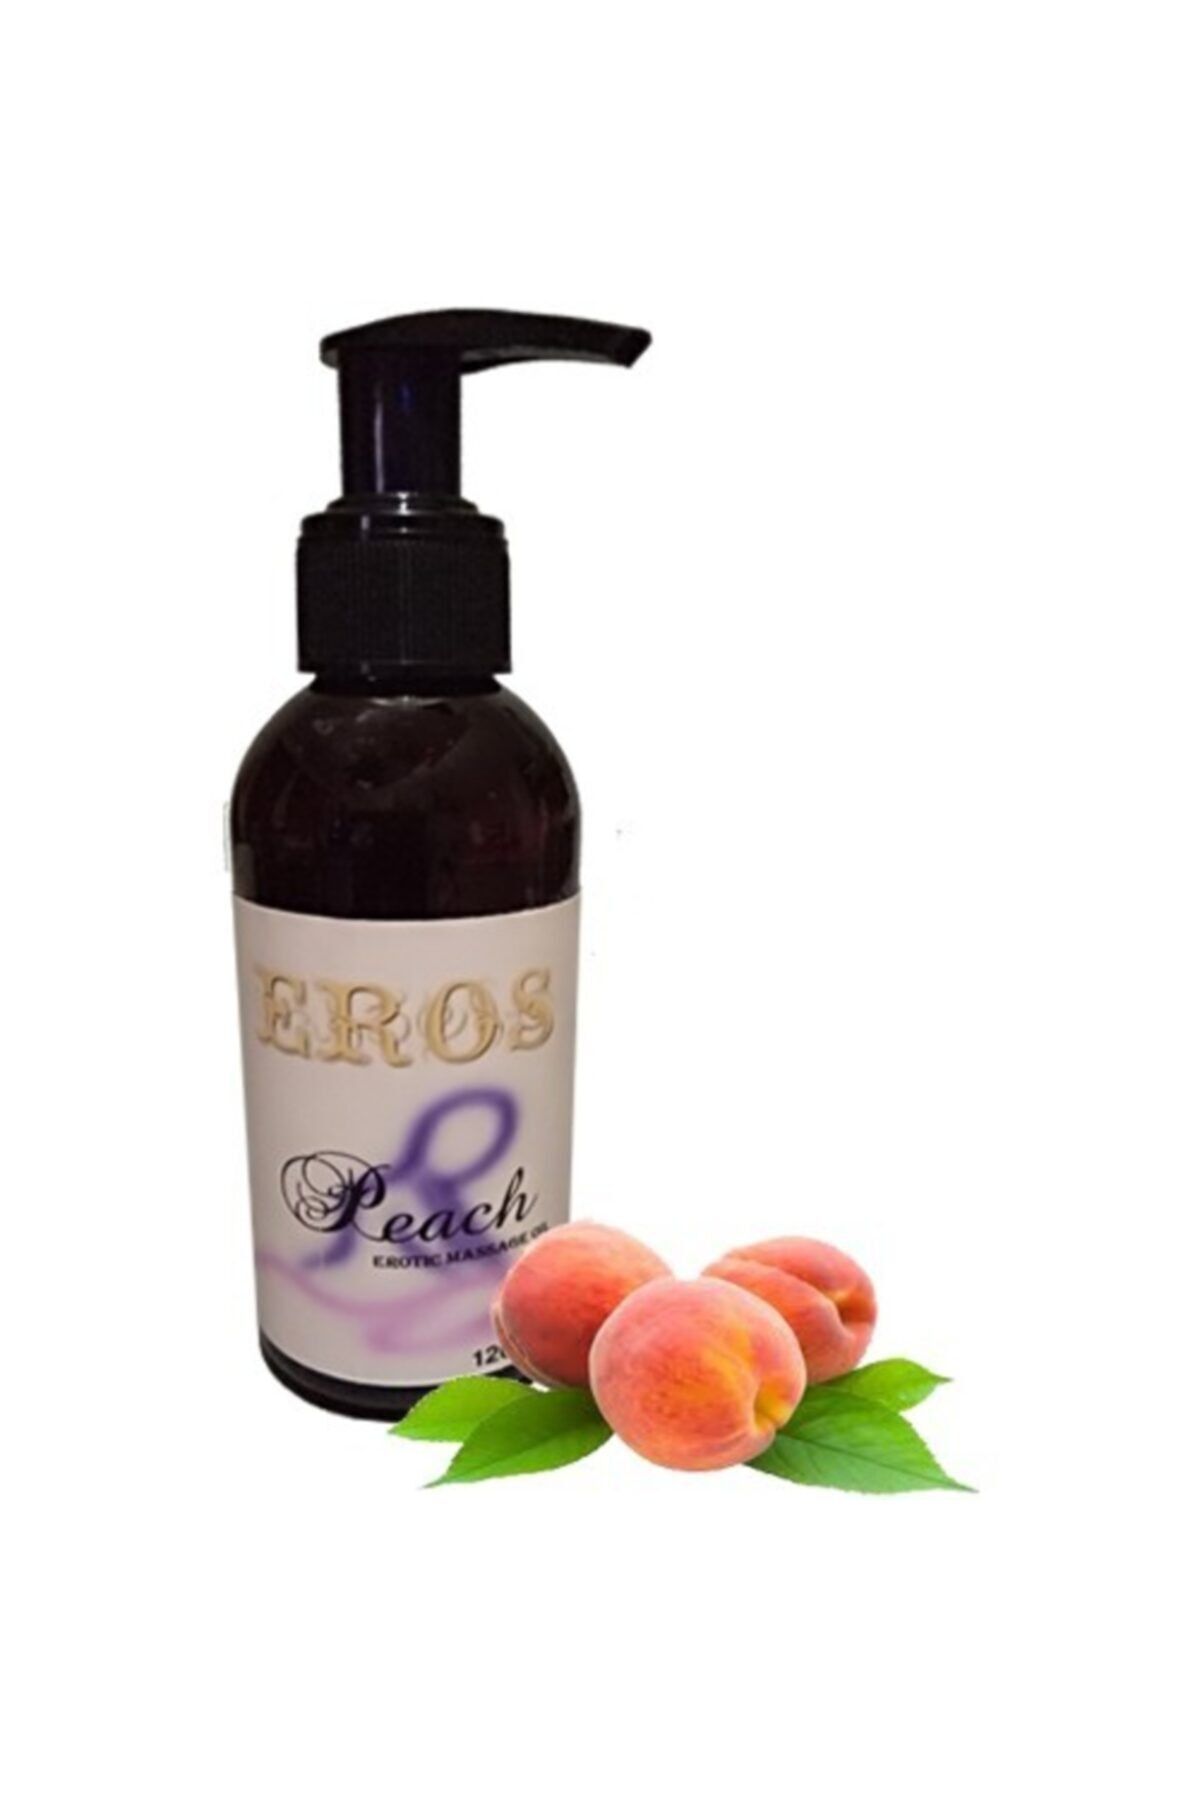 Eros Hologramlı  Peach Erotic Massage Oil 120 ml Şeftali Kokulu Erotik Masaj Yağı